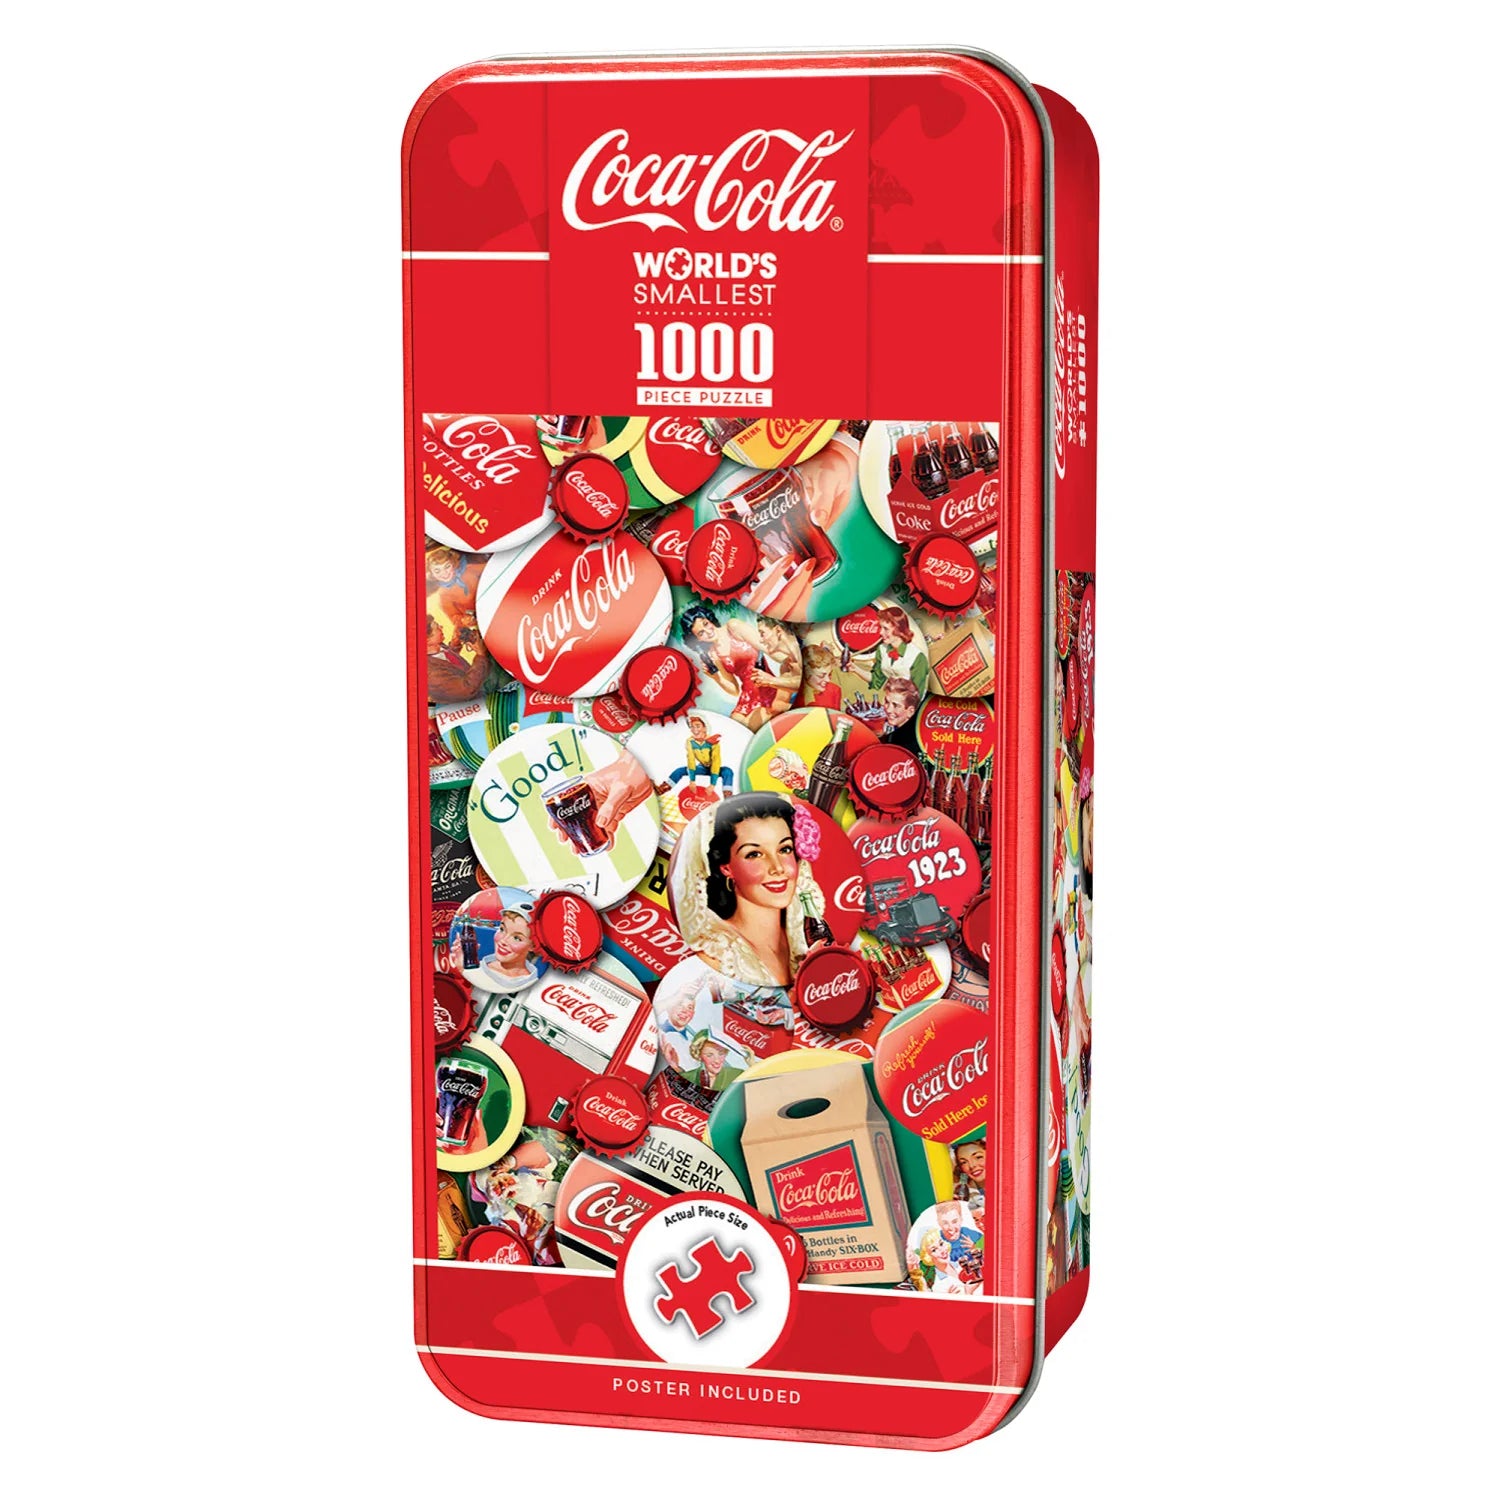 Coca-Cola - World's Smallest 1000 piece Puzzle | L.A. Mood Comics and Games